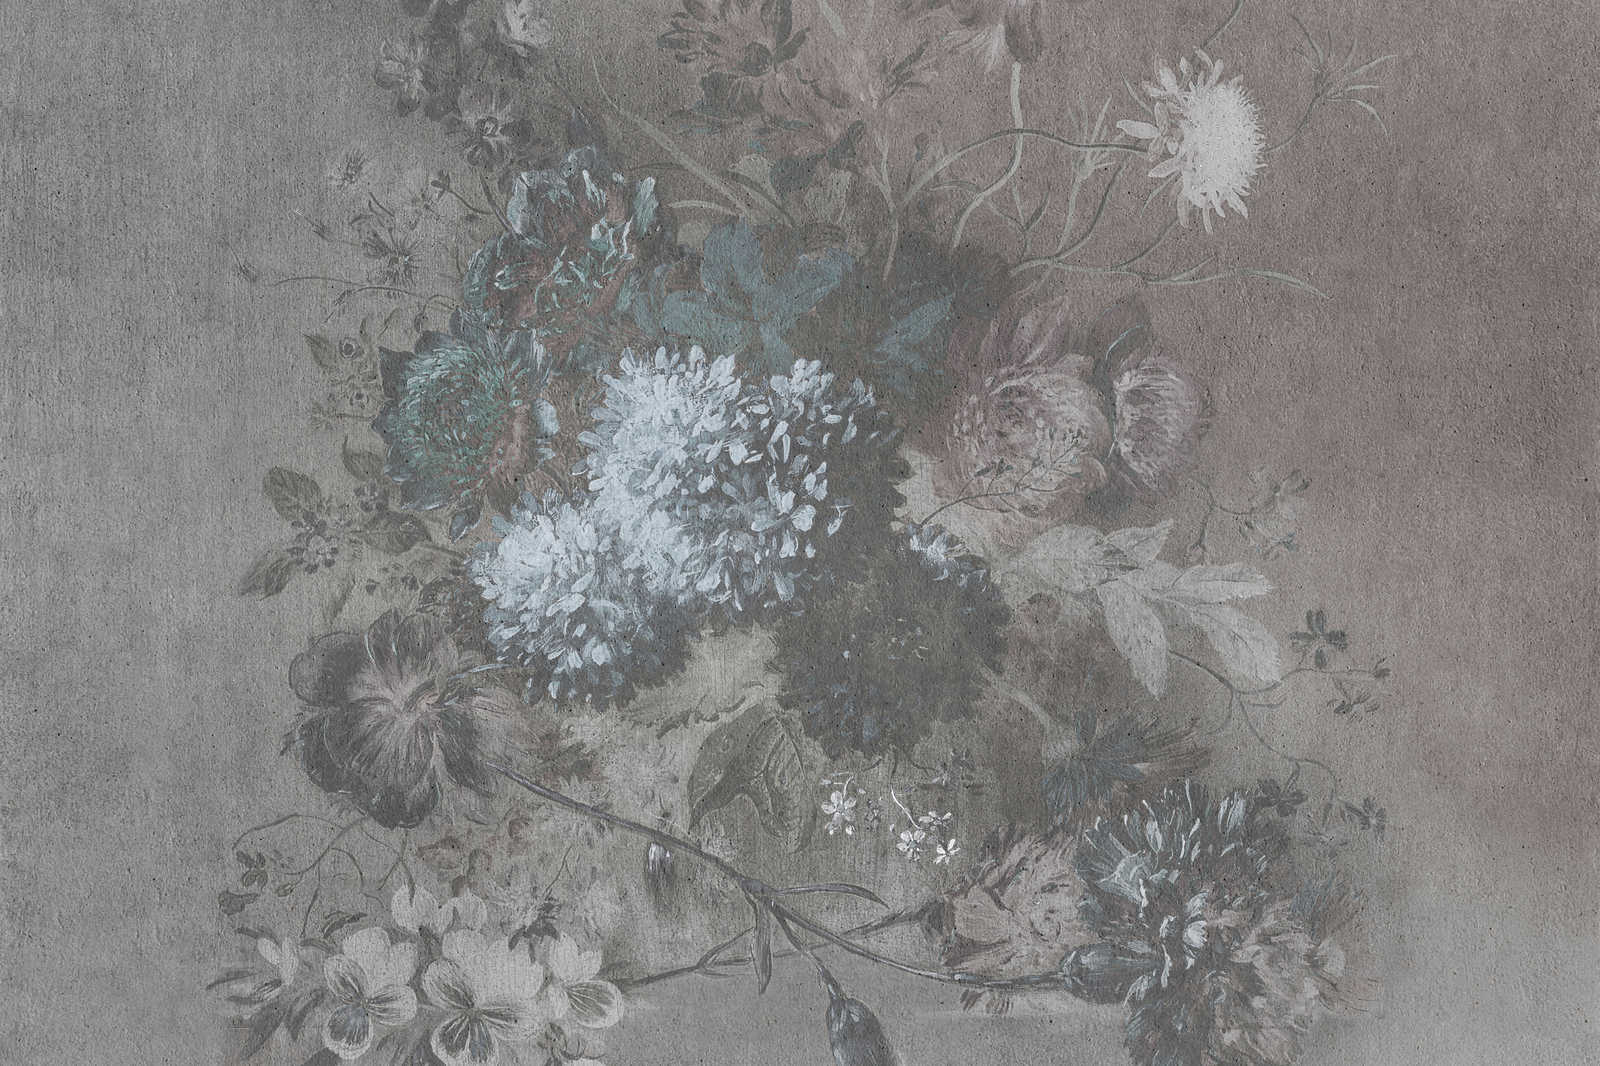             Leinwandbild Blumen-Bouquet im Vintage Stil | blau, grau – 1,20 m x 0,80 m
        